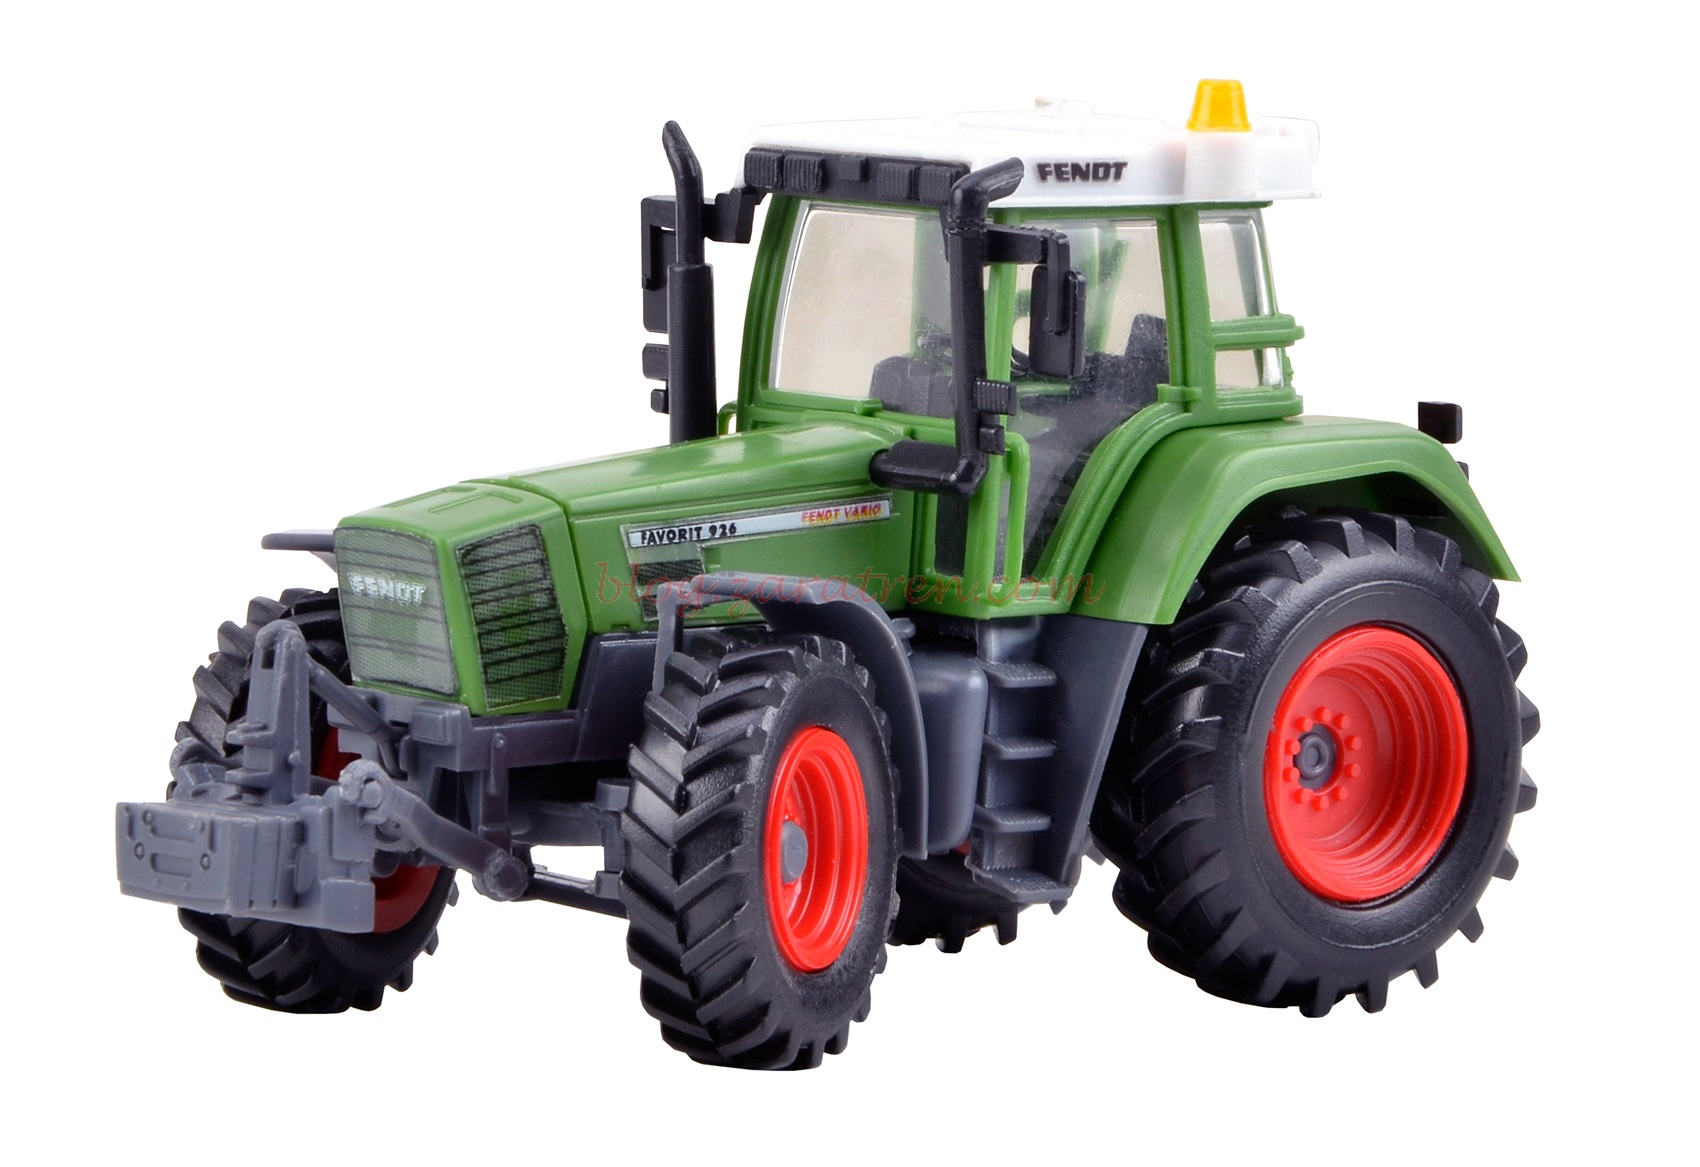 Kibri – Tractor FENDT Vario Favorit 926, Kit para montar, Escala H0, Ref: 12265